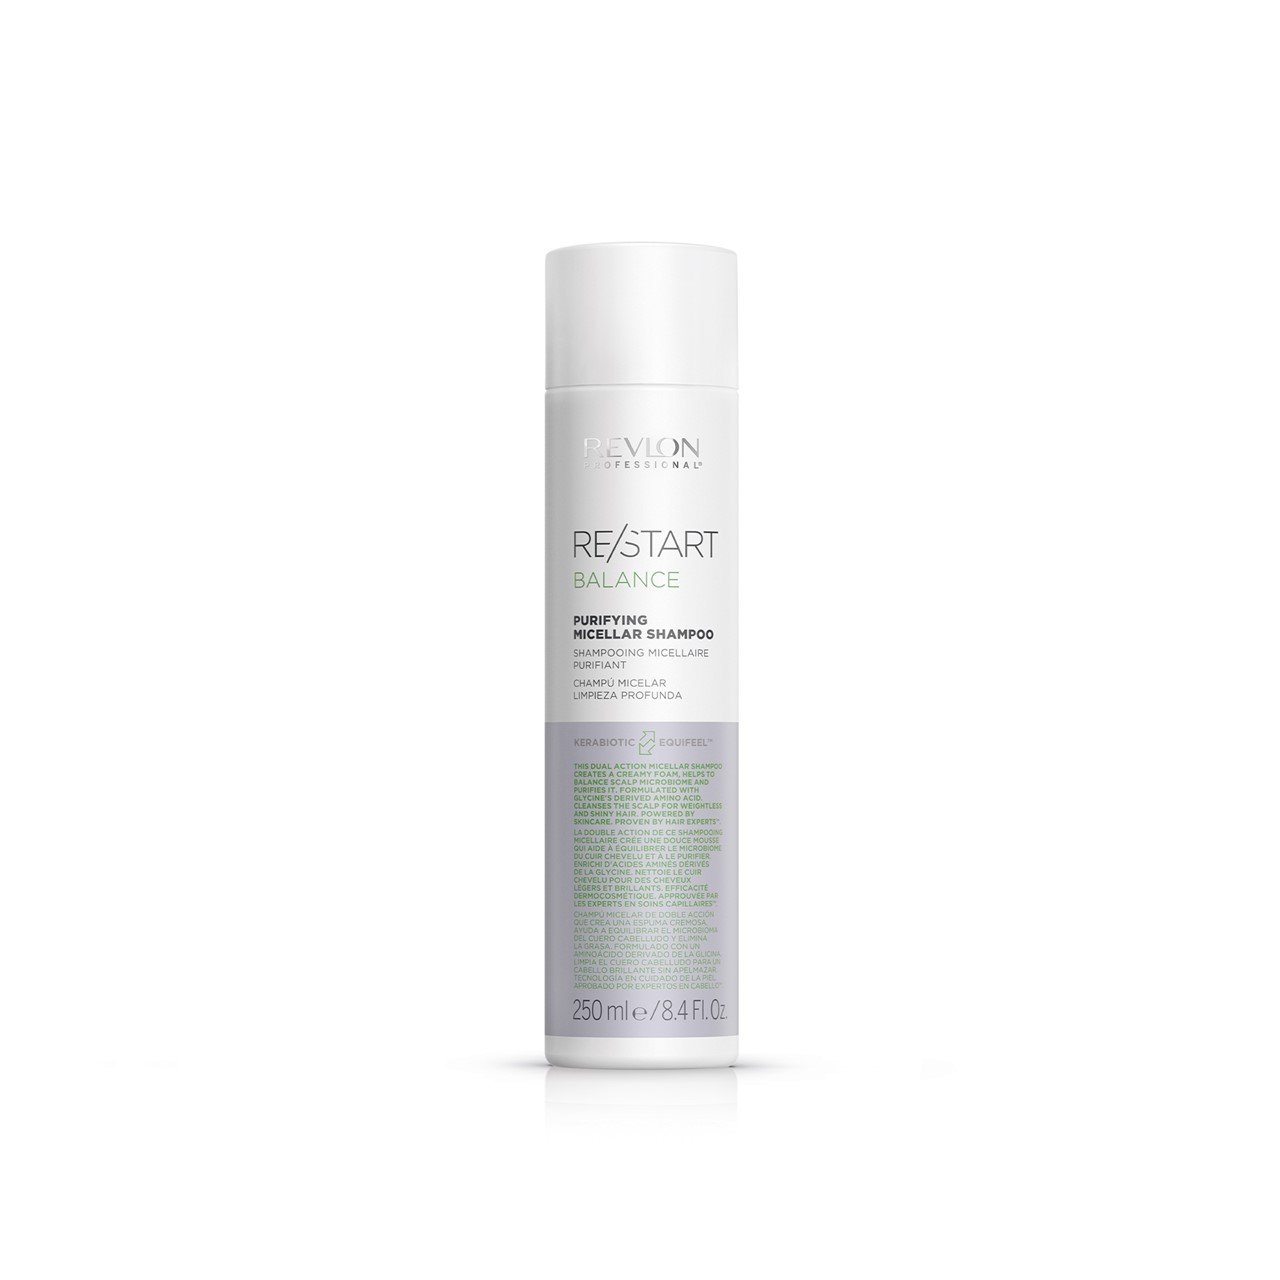 Revlon Professional Re/Start Balance Purifying Micellar Shampoo 250ml (8.45fl oz)